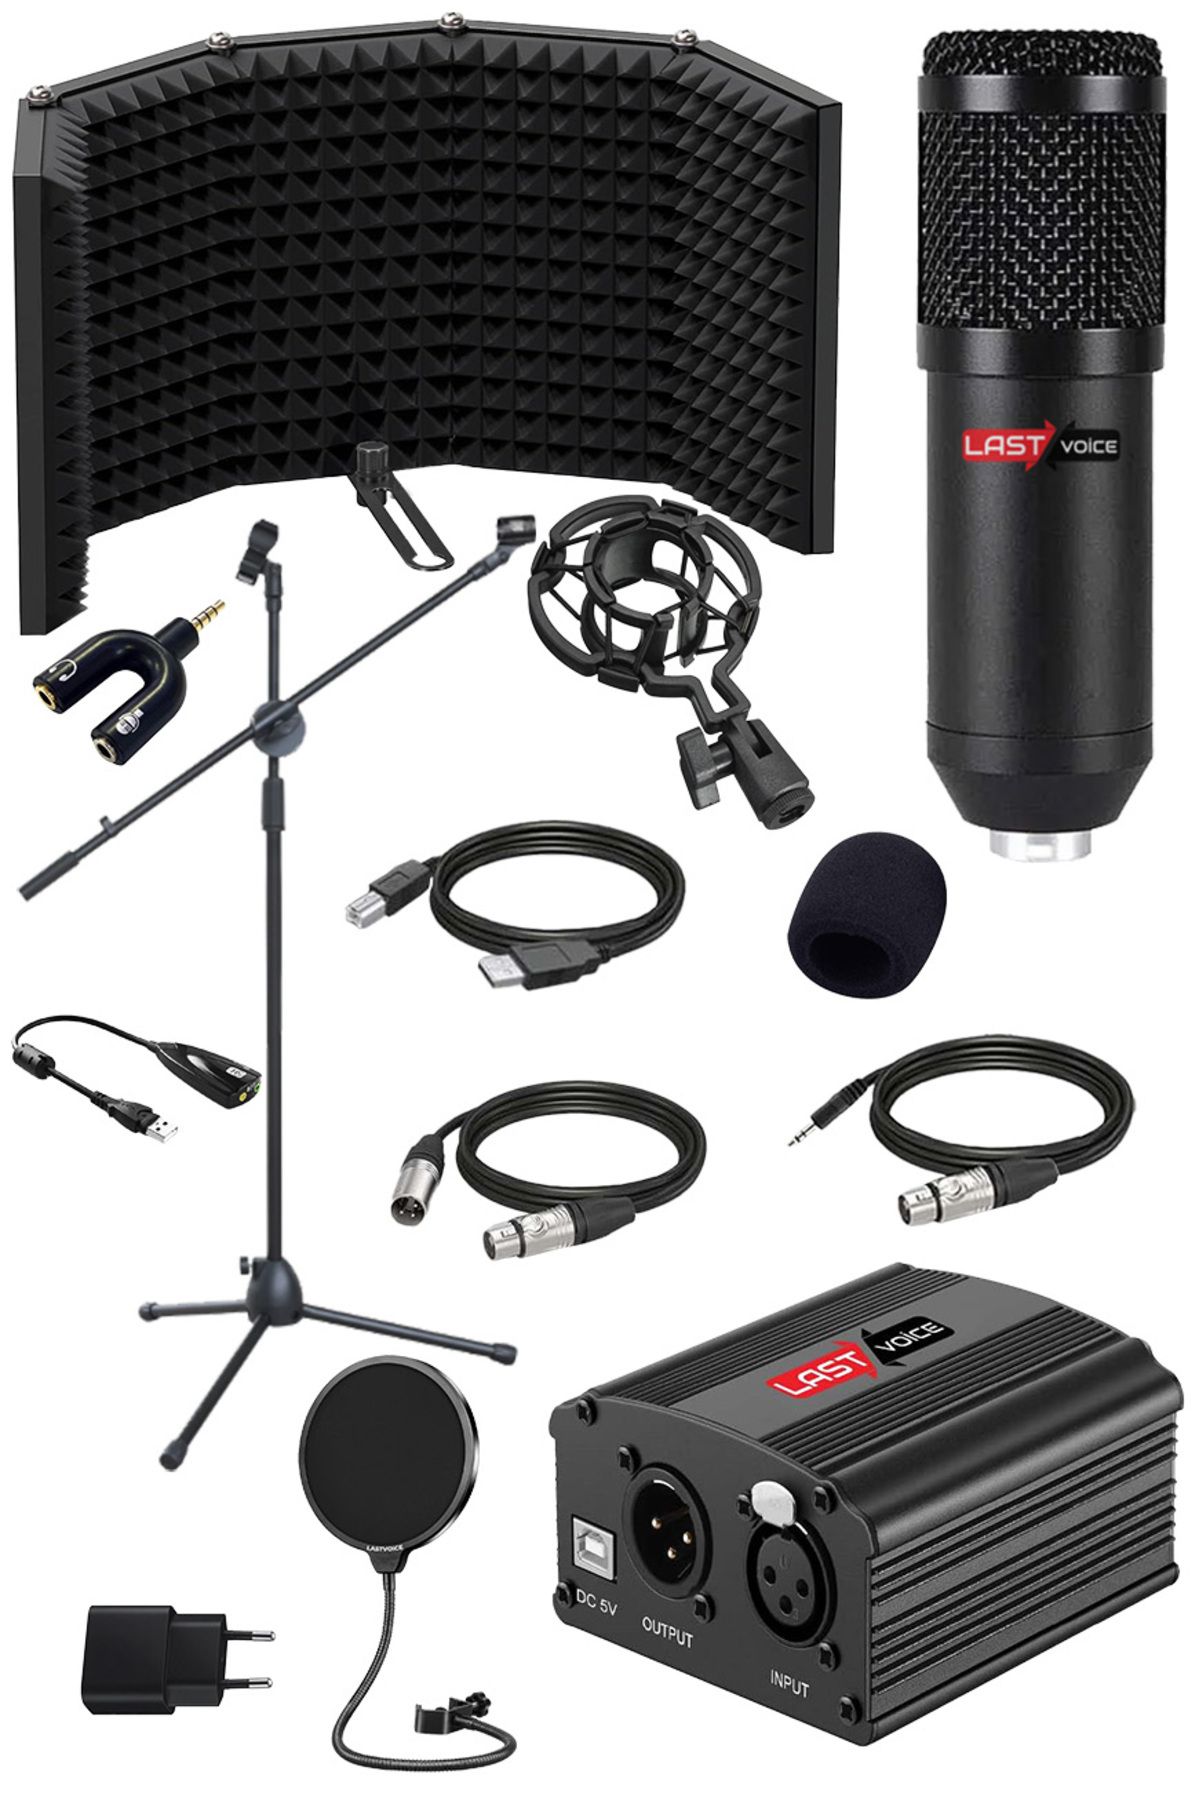 Lastvoice Bm800pfx Mikrofon Yalıtım Paneli Phantom Stand Filtre Shock Mount set